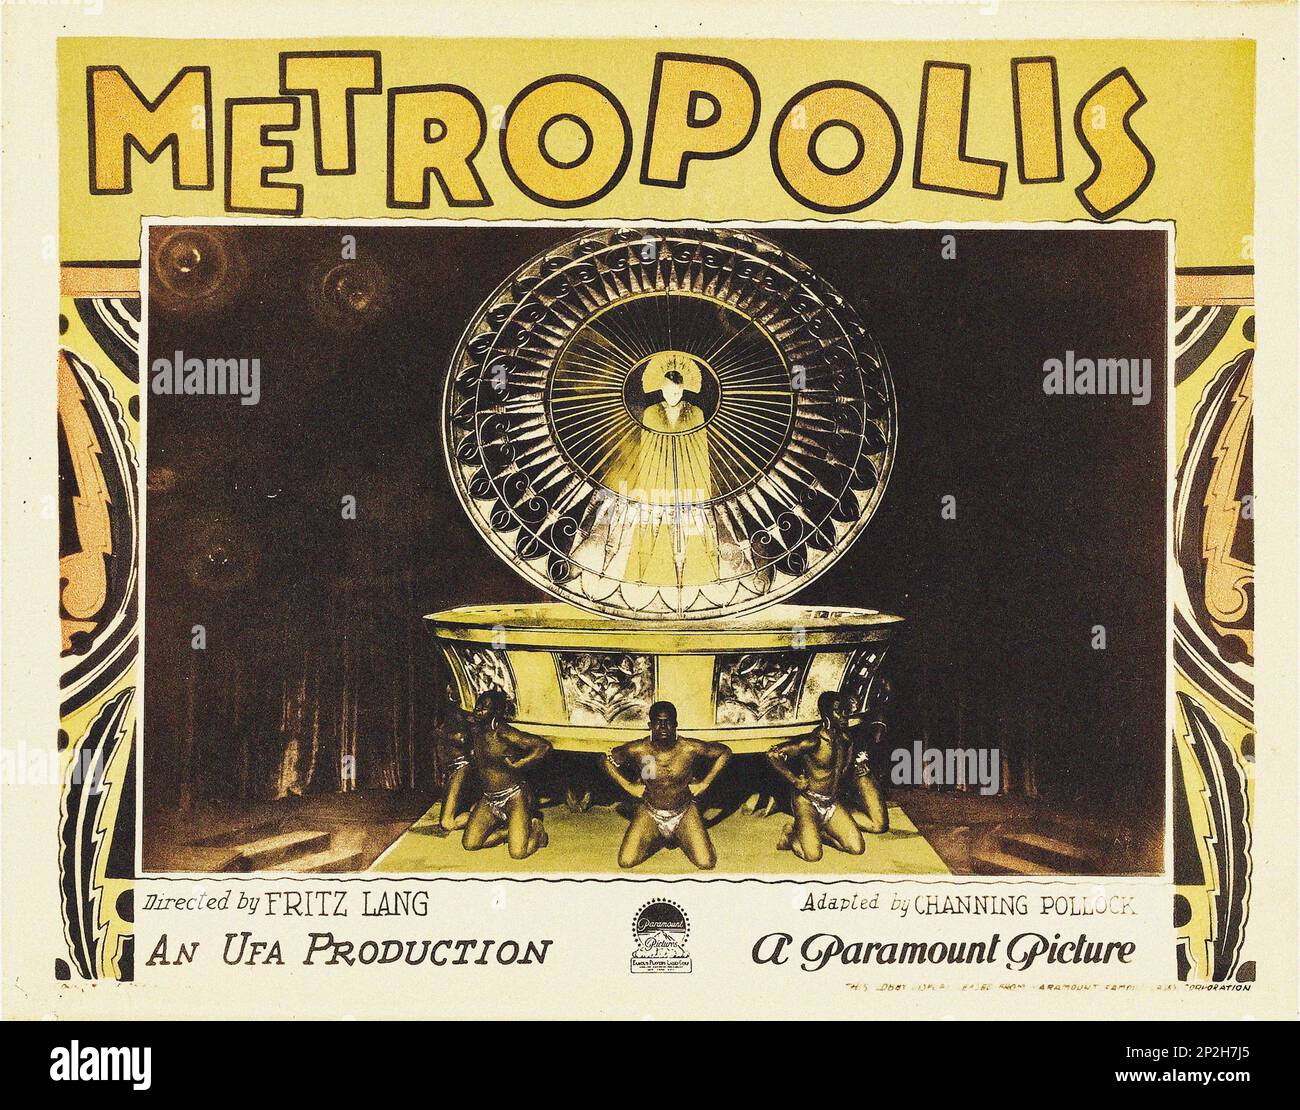 Lobby Card "Metropolis" von Fritz lang, 1927. Private Sammlung. Stockfoto